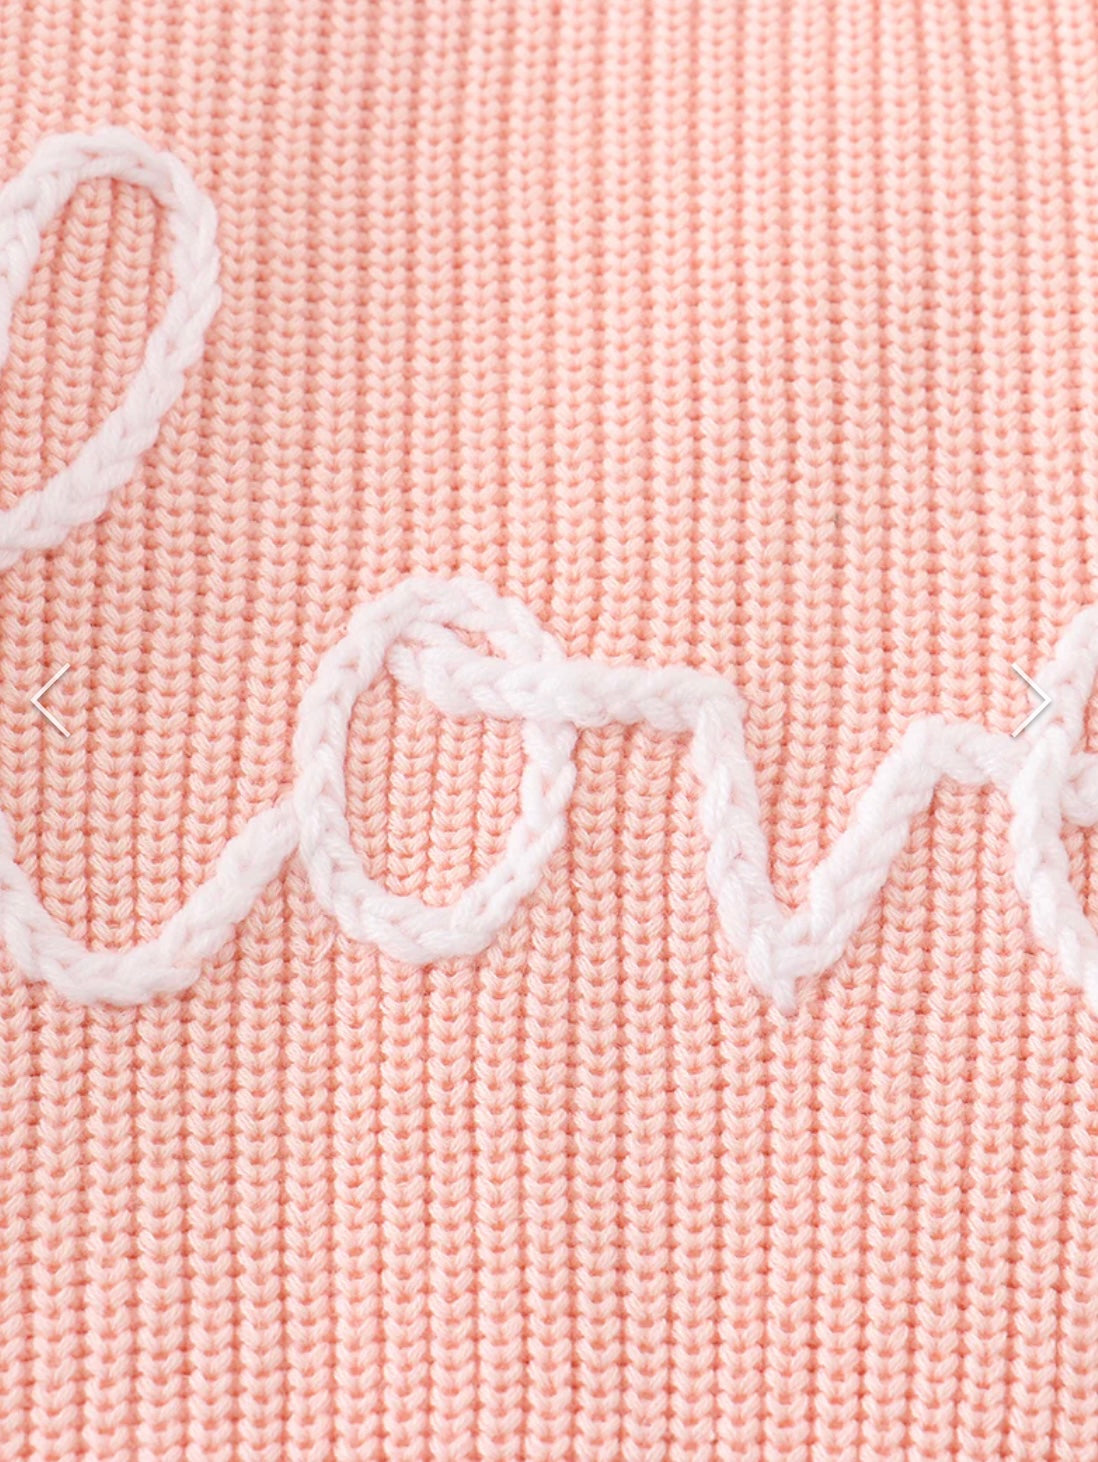 Girls Love Sweater